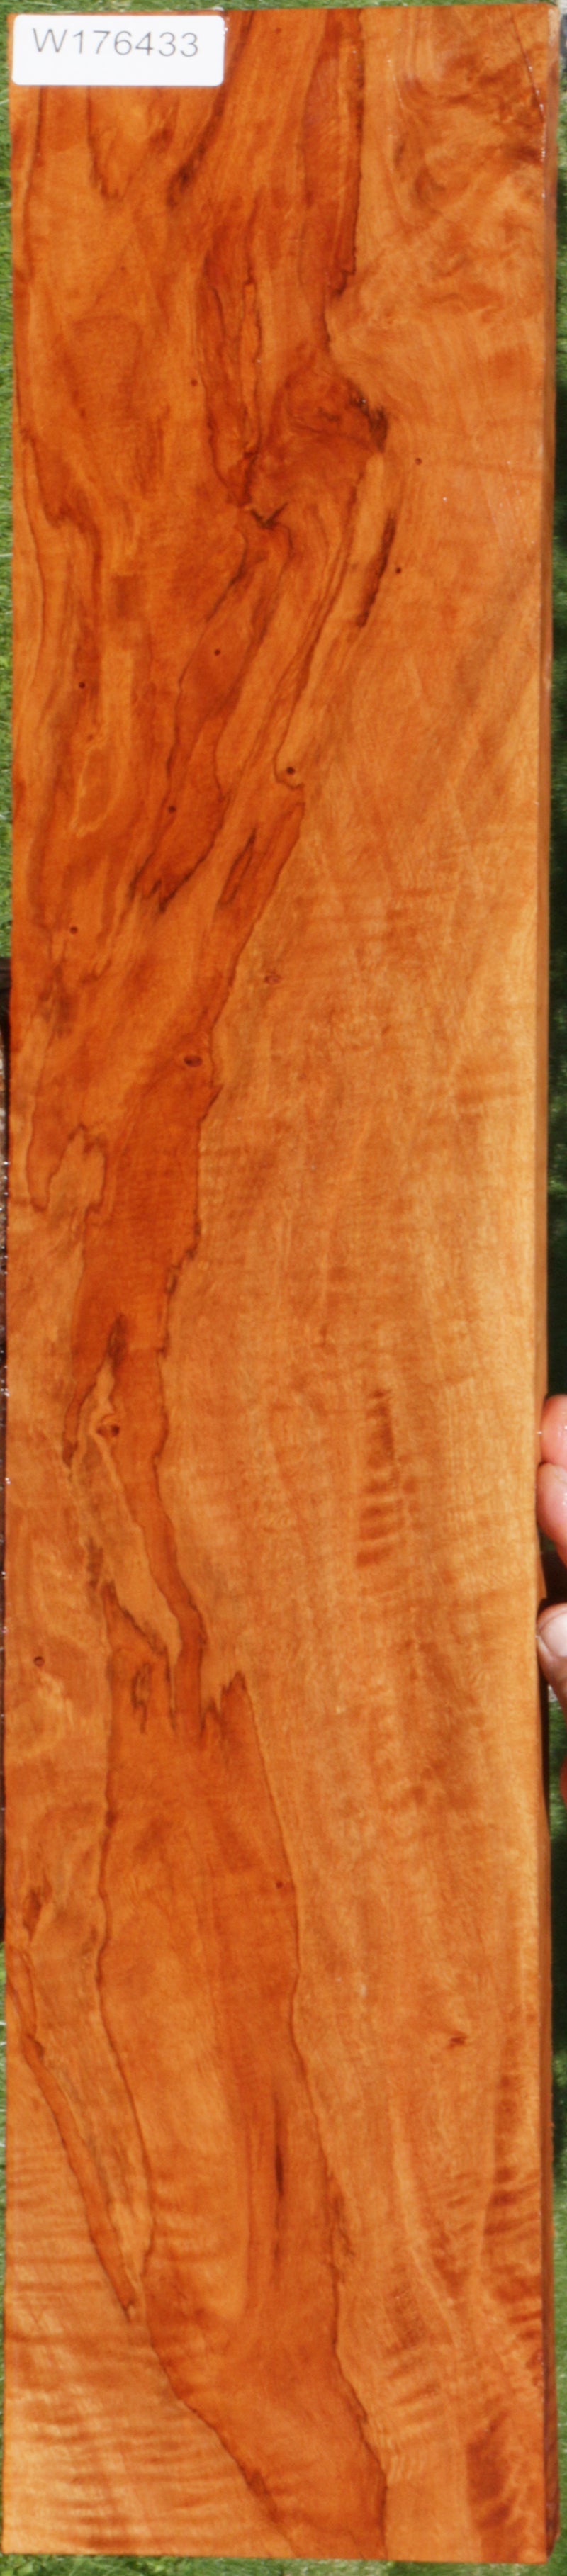 Extra Fancy Figured Rambutan Lumber